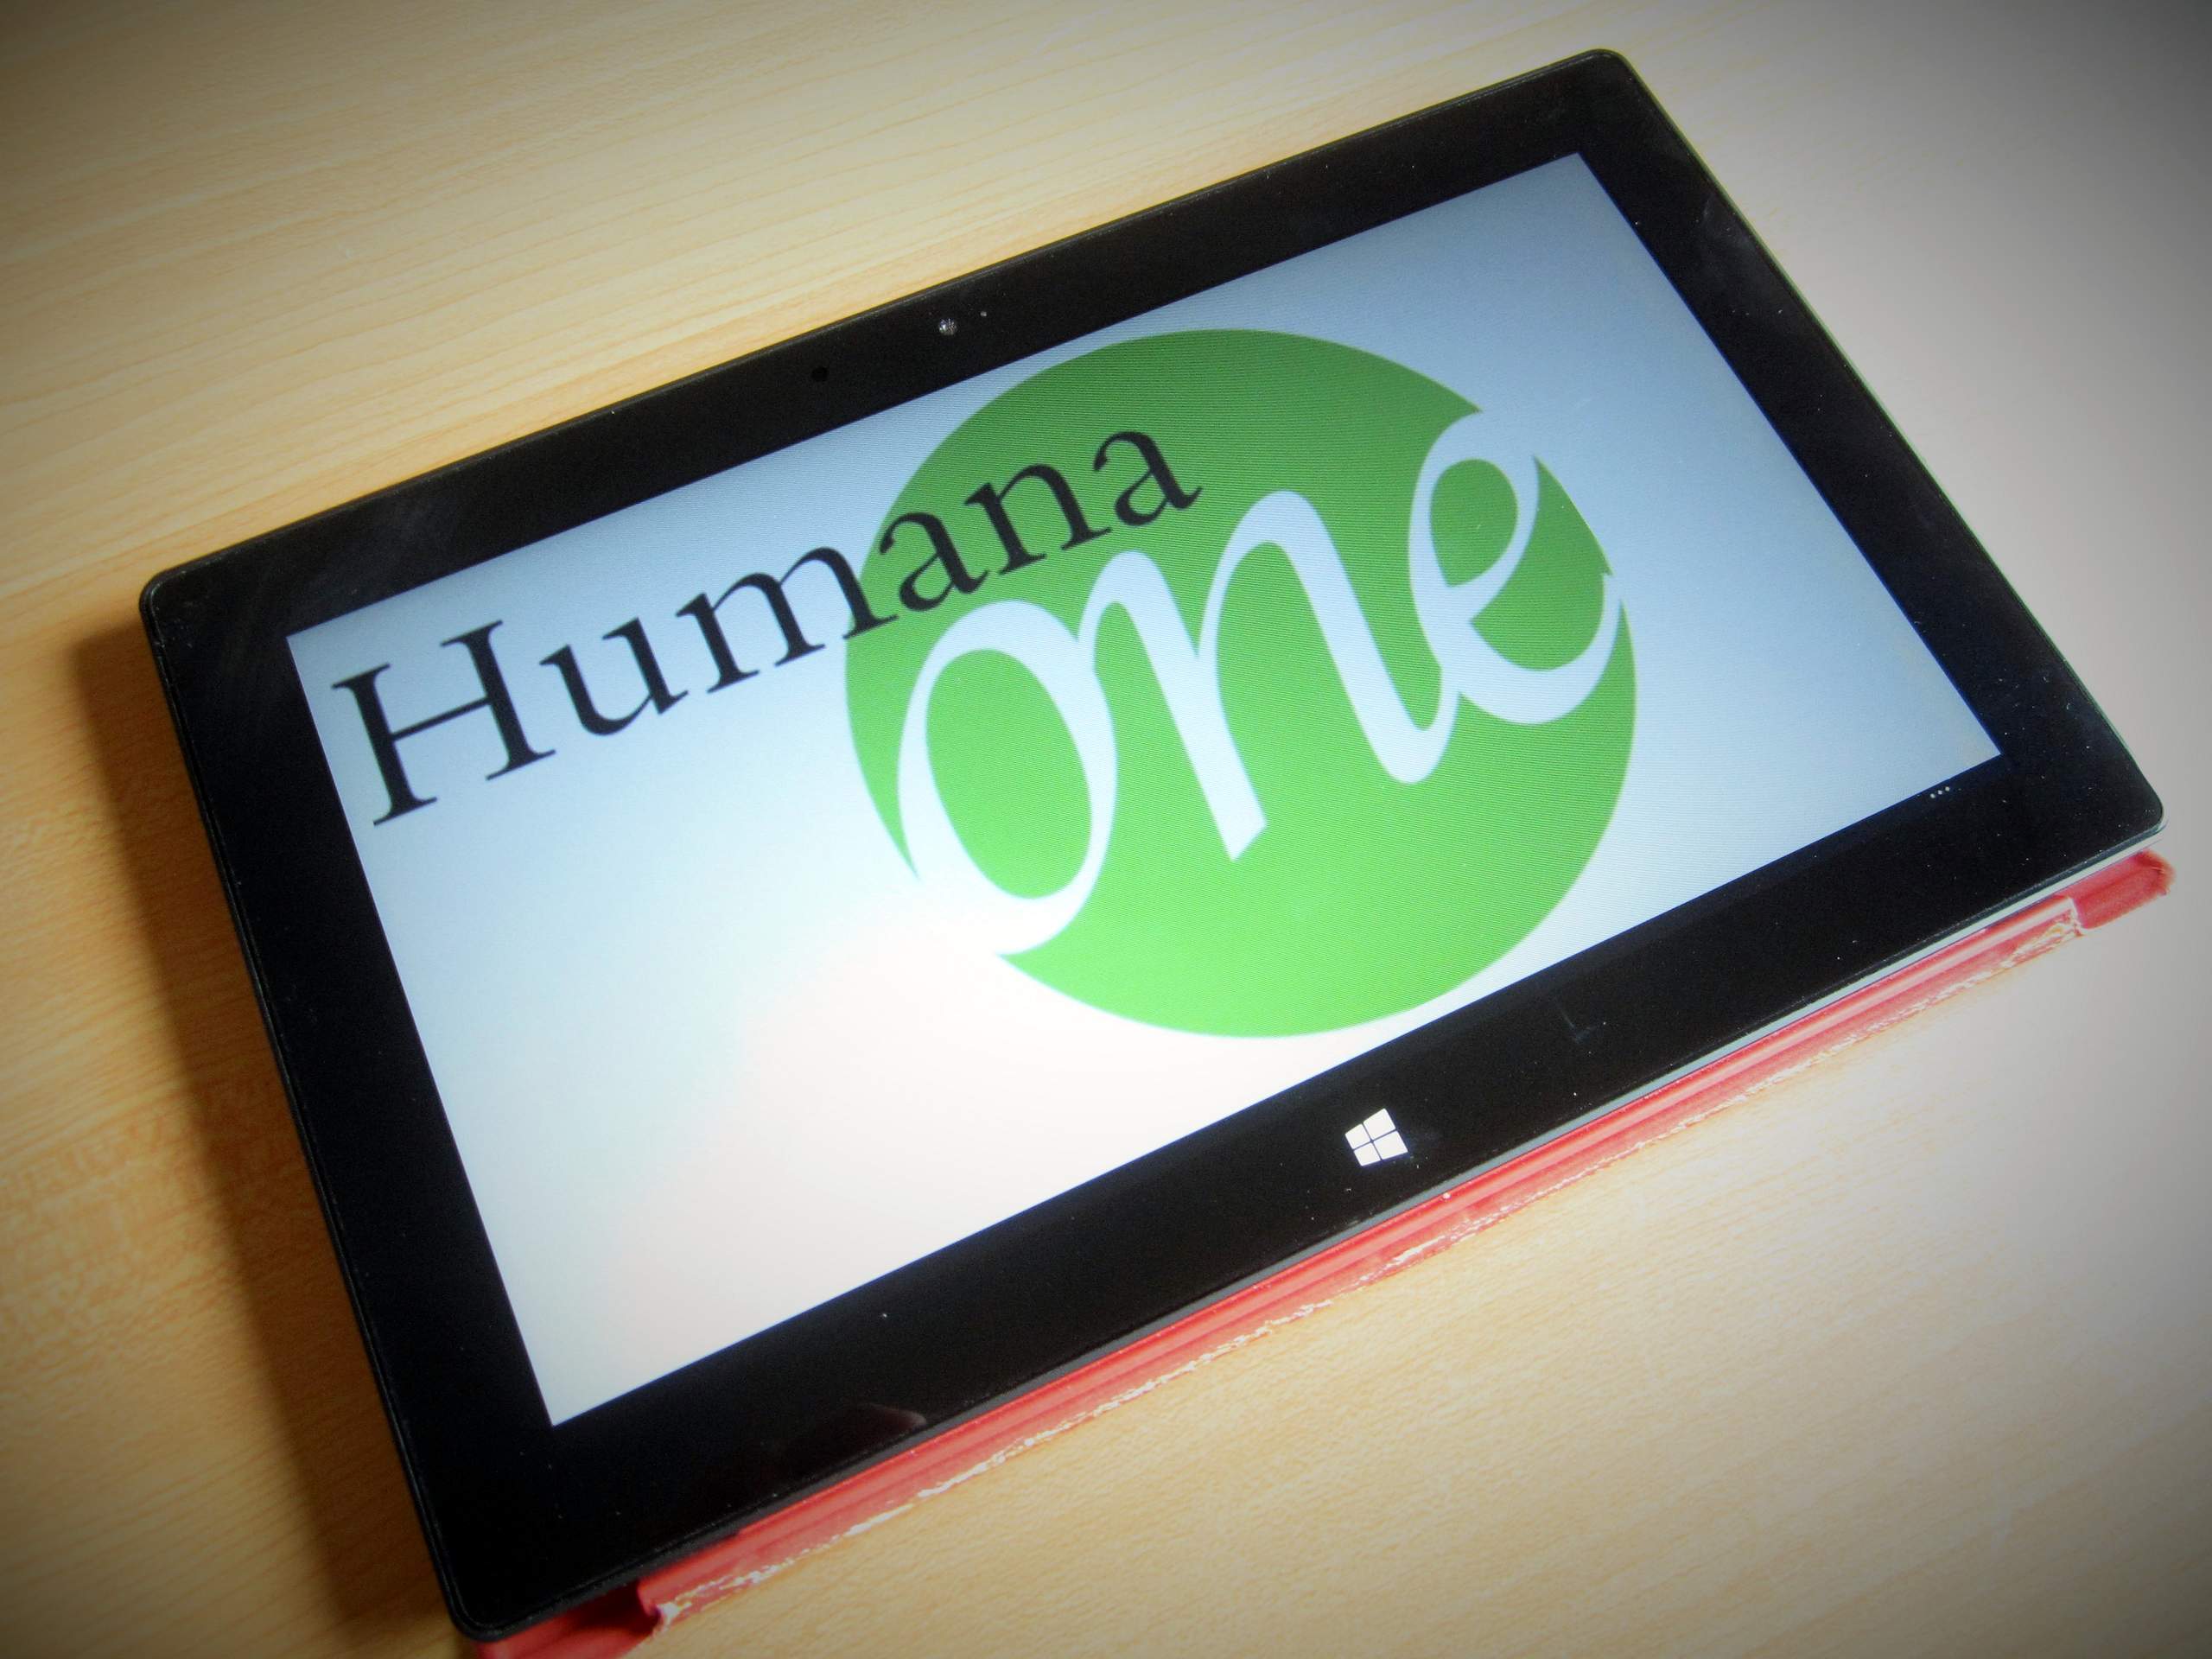 Humana One logo on tablet